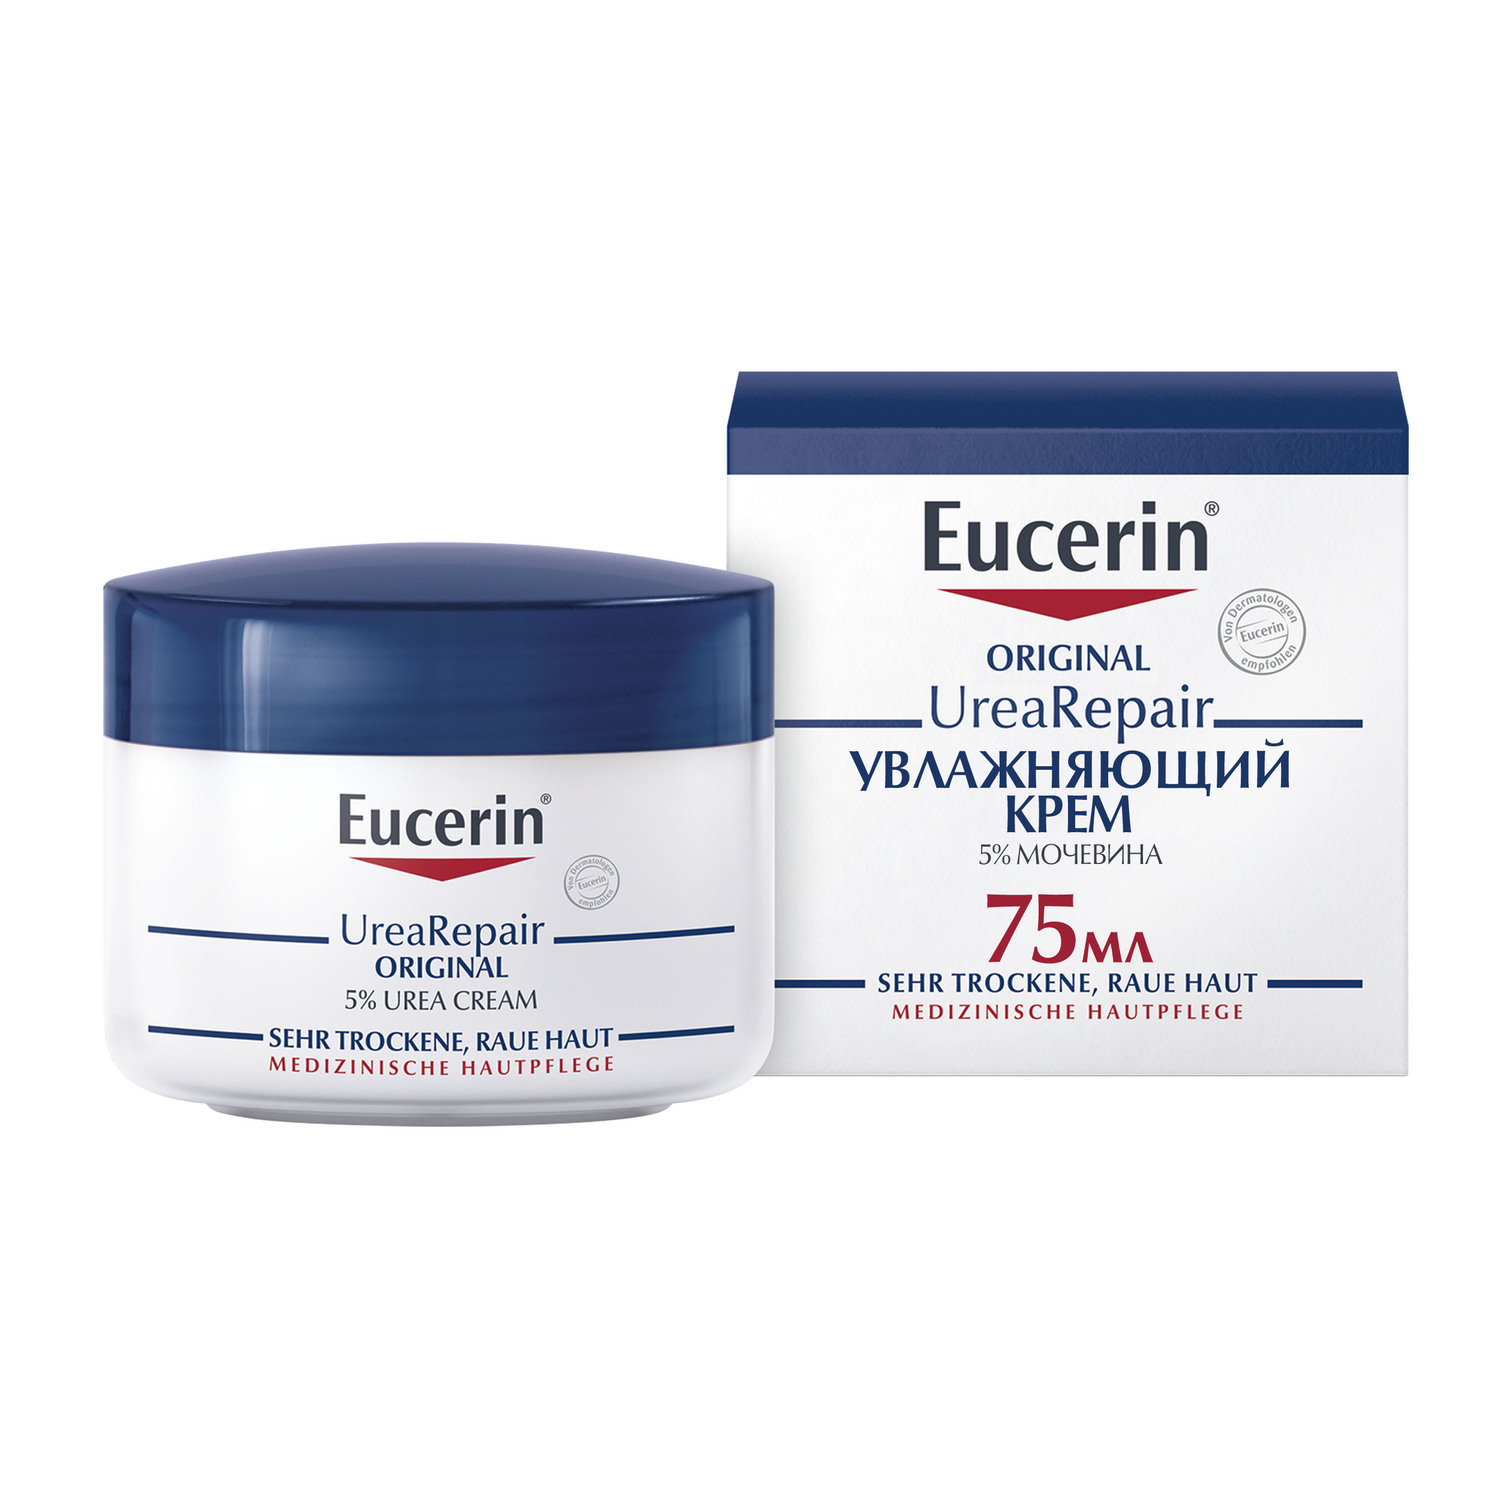 Eucerin Увлажняющий крем с 5% мочевиной, 75 мл (Eucerin, UreaRepair) eucerin увлажняющий крем с 5% мочевиной 450 мл eucerin urearepair